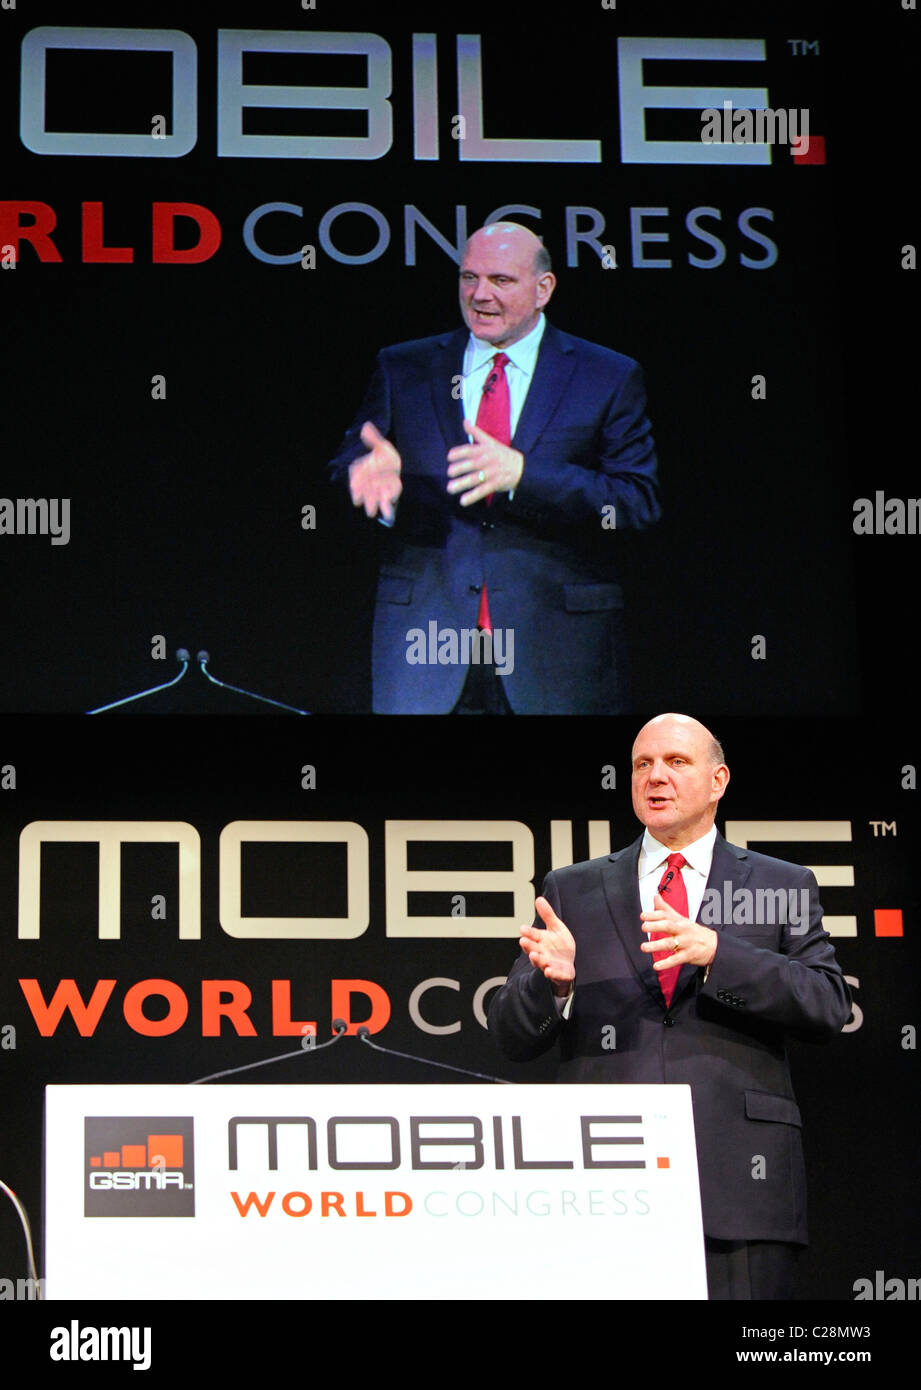 Steve Ballmer, Microsoft CEO speaking at Mobile World Congress in Barcelona 2011 Stock Photo